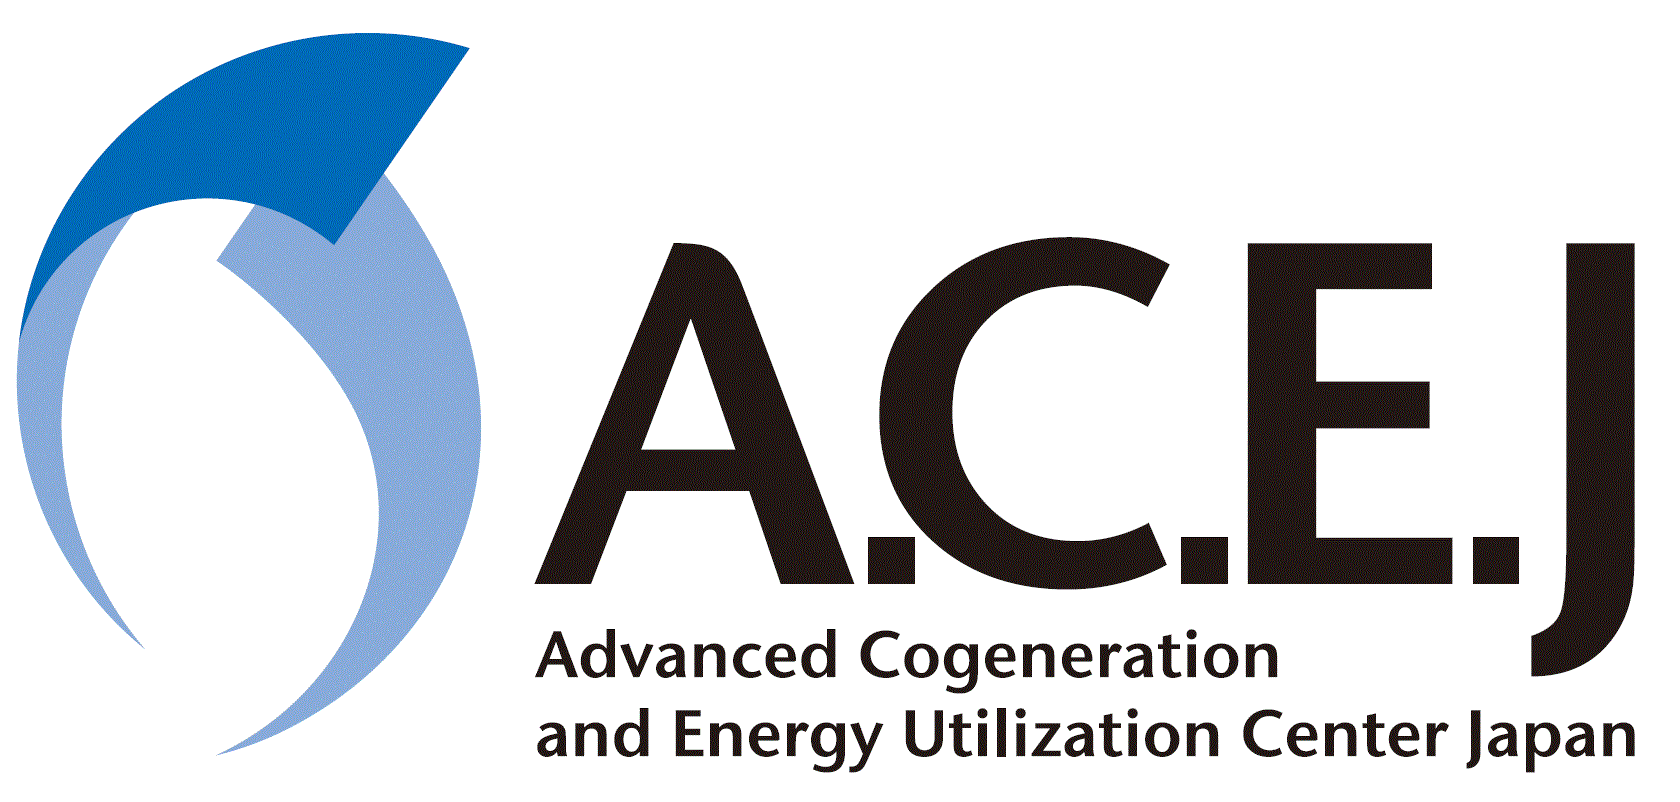 ACEJ - Advanced Cogeneration and Energy Utilization Center Japan logo